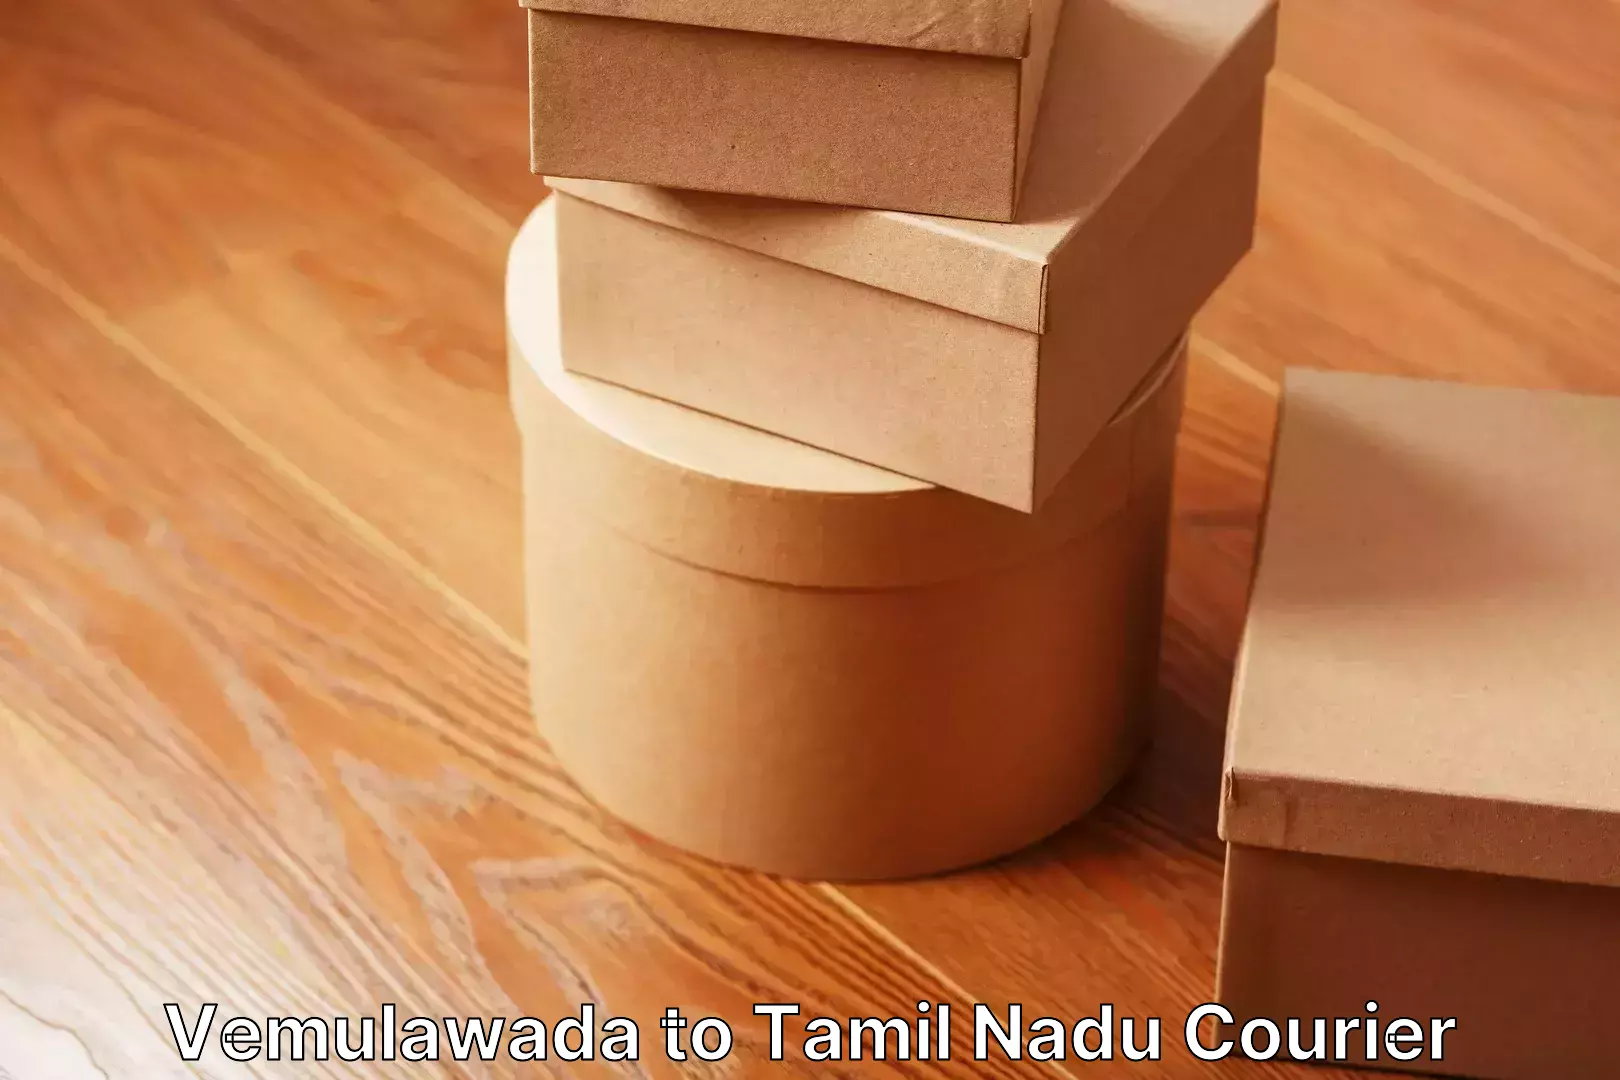 Moving and packing experts Vemulawada to Tamil Nadu